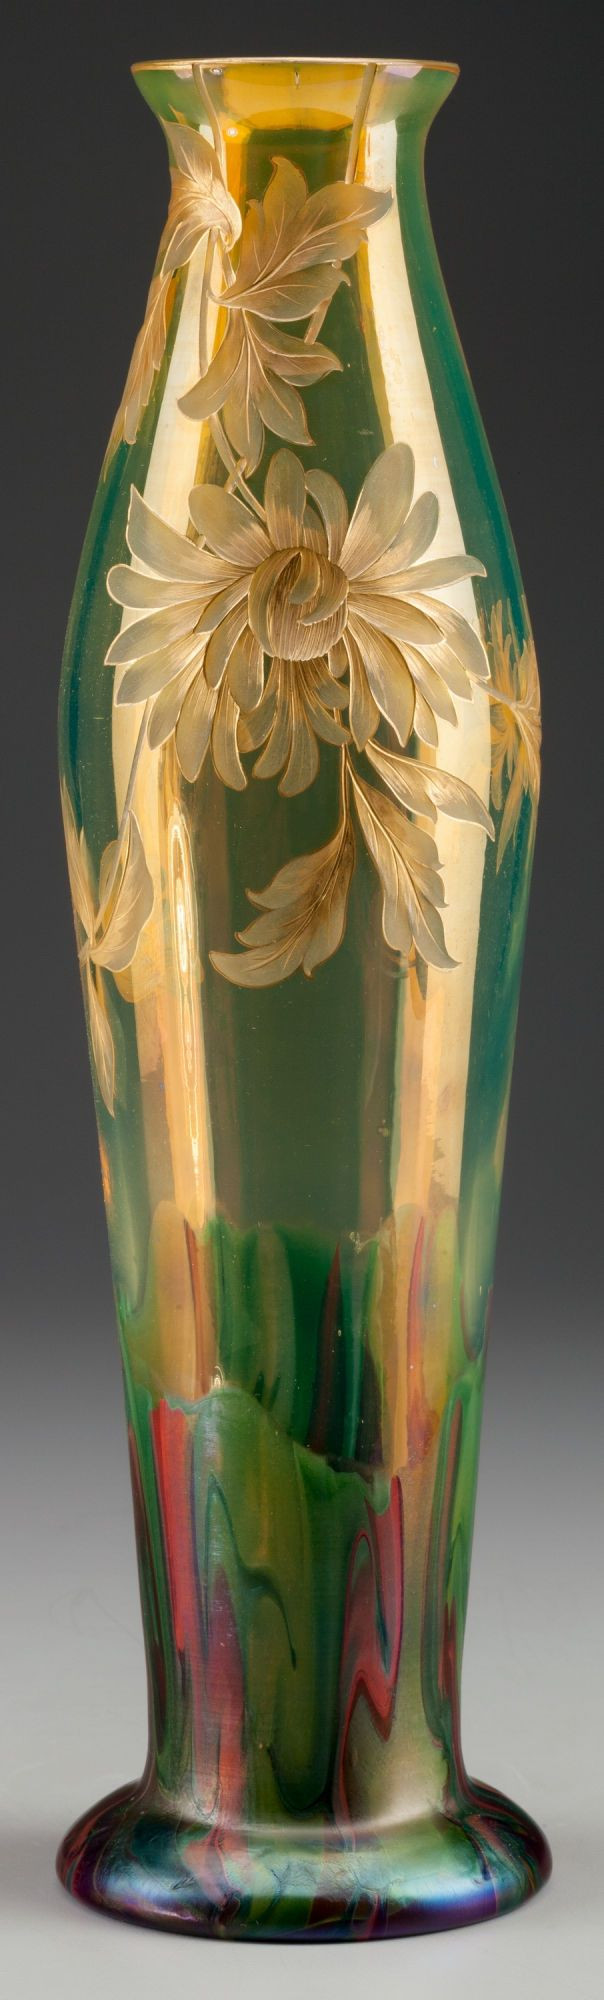 antique hyacinth vases for sale of 138 best vases images on pinterest art nouveau glass art and art regarding rare graf harrach enameled and engraved opalescent glass floralvase circa marked g